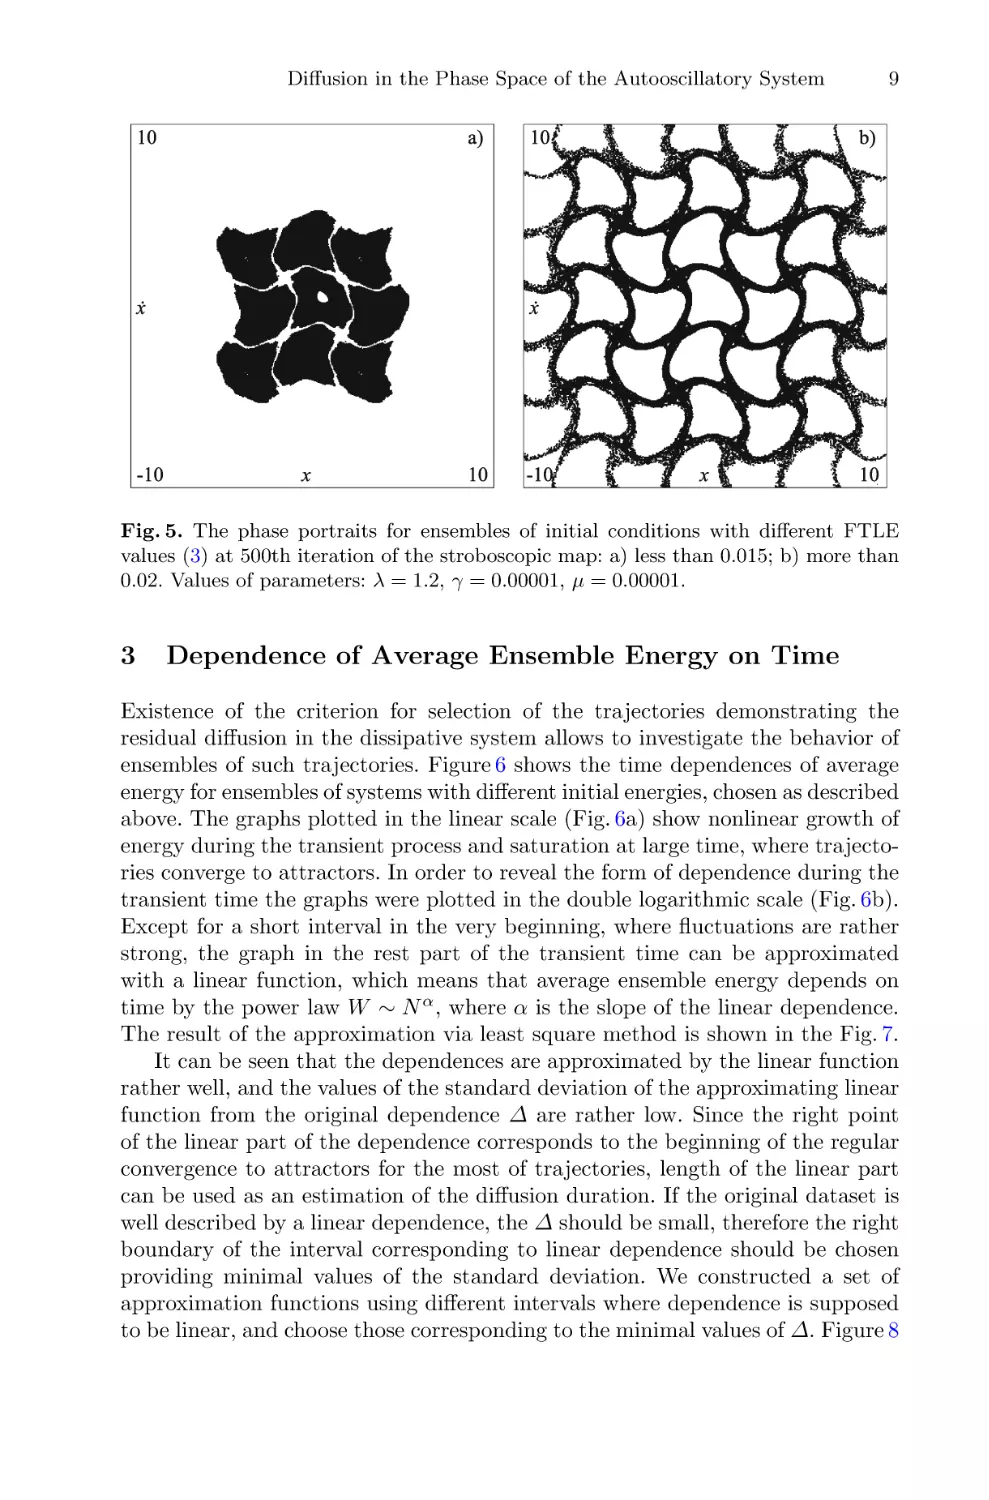 3 Dependence of Average Ensemble Energy on Time